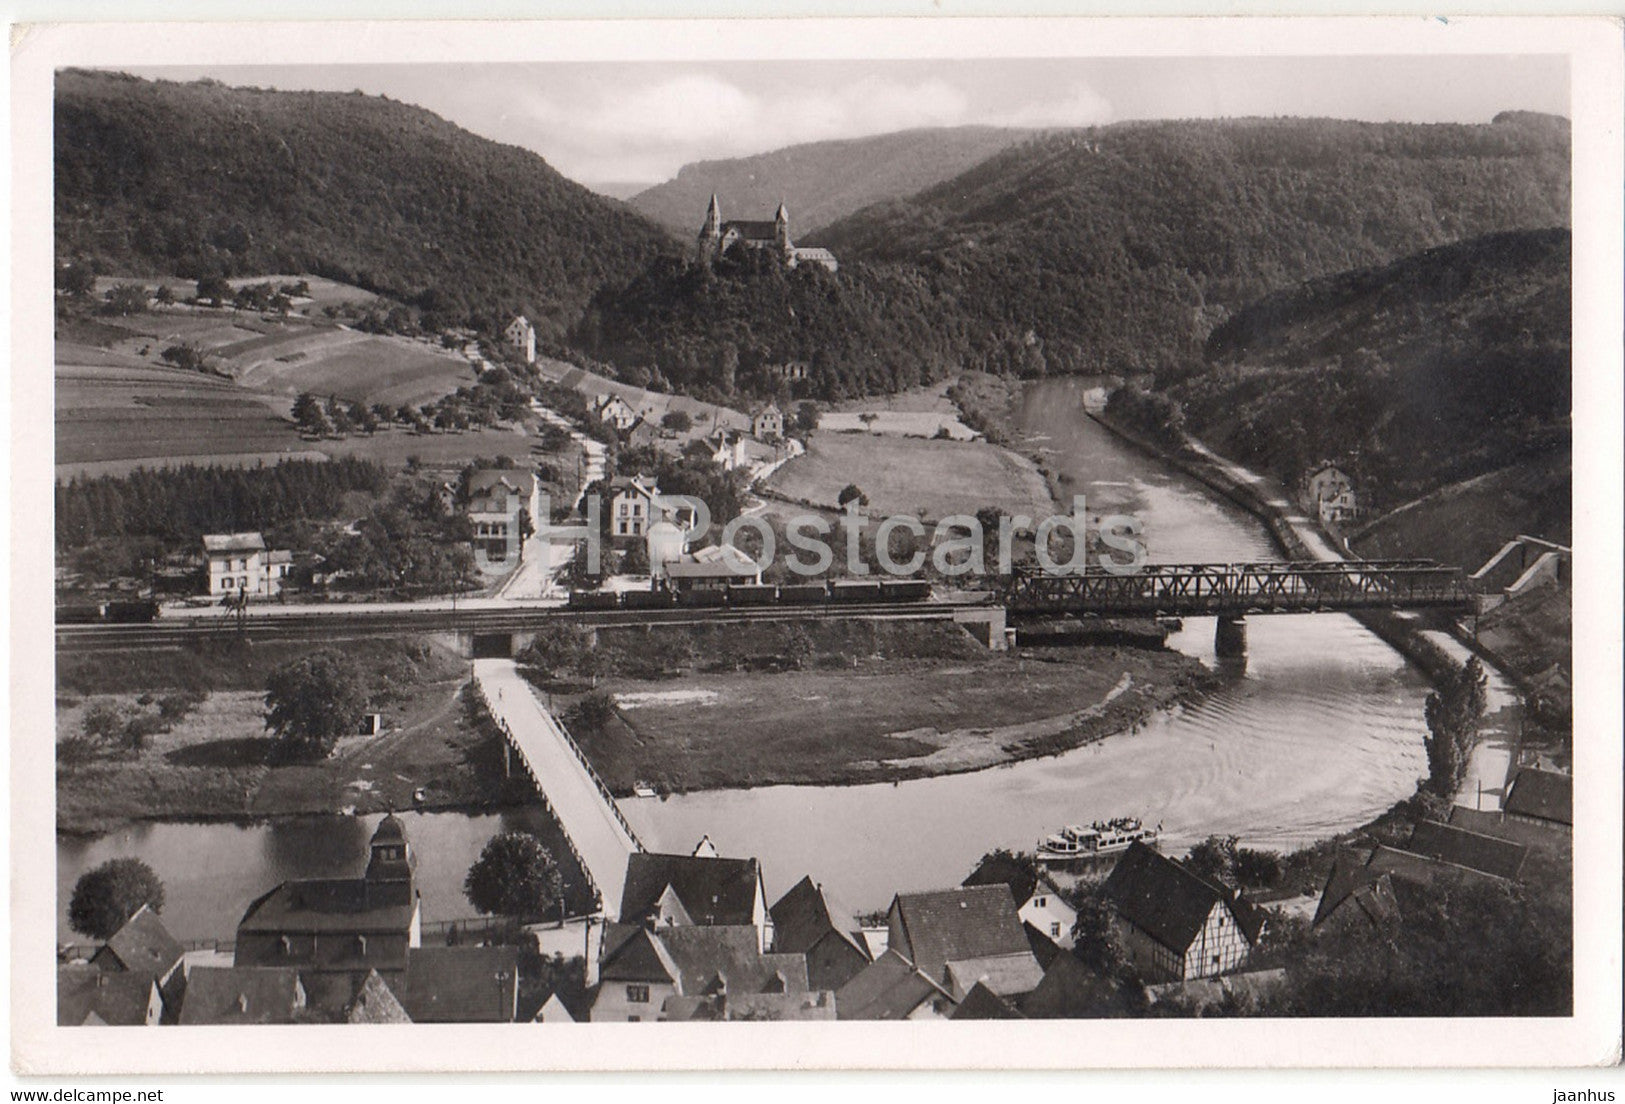 Kloster Arnstein bei Oberhof an der Lahn - railway - train - 1952 - Germany - unused - JH Postcards